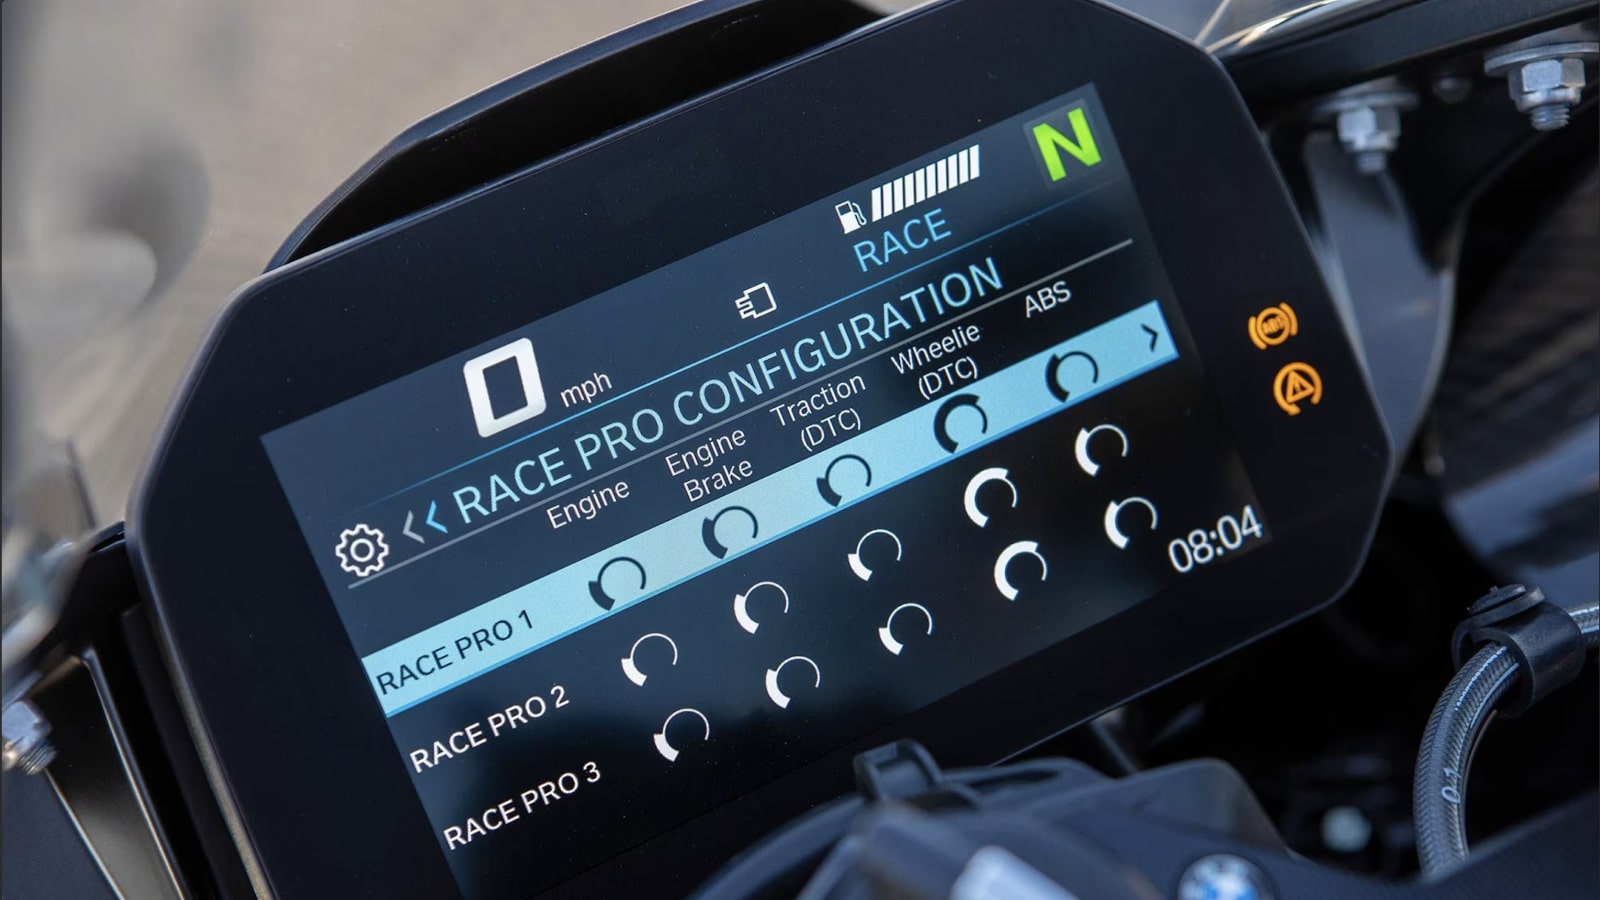 BMW S1000RR Digital Interface race pro mode configurator